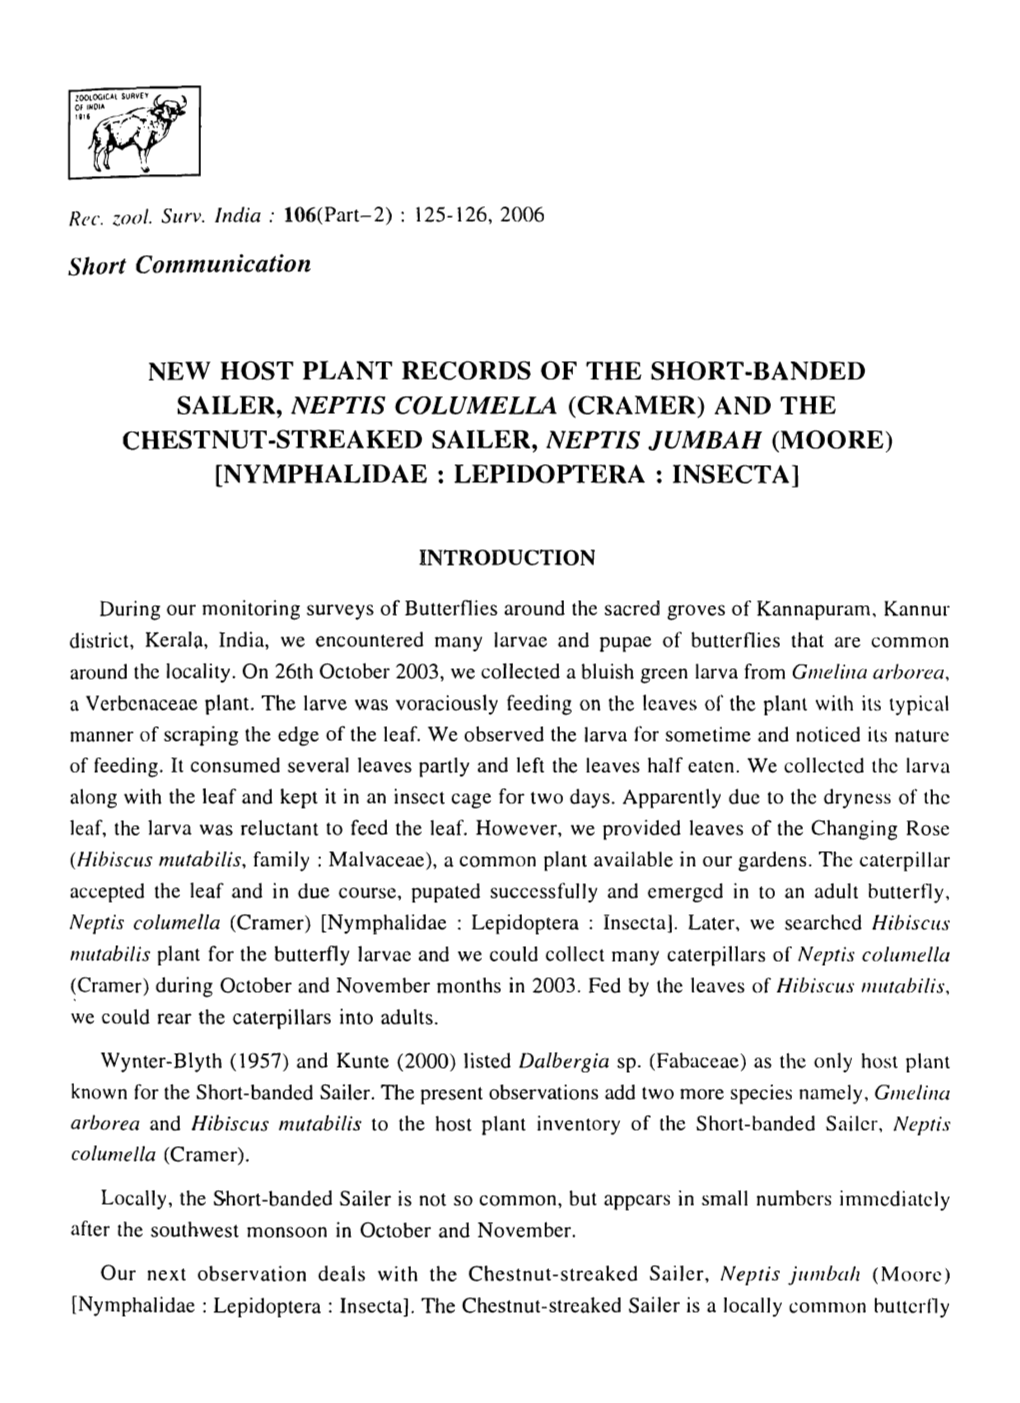 NEW HOST PLANT RECORDS of the SHORT-BANDED CHESTNUT -STREAKED SAILER, NEPTIS Lumbah